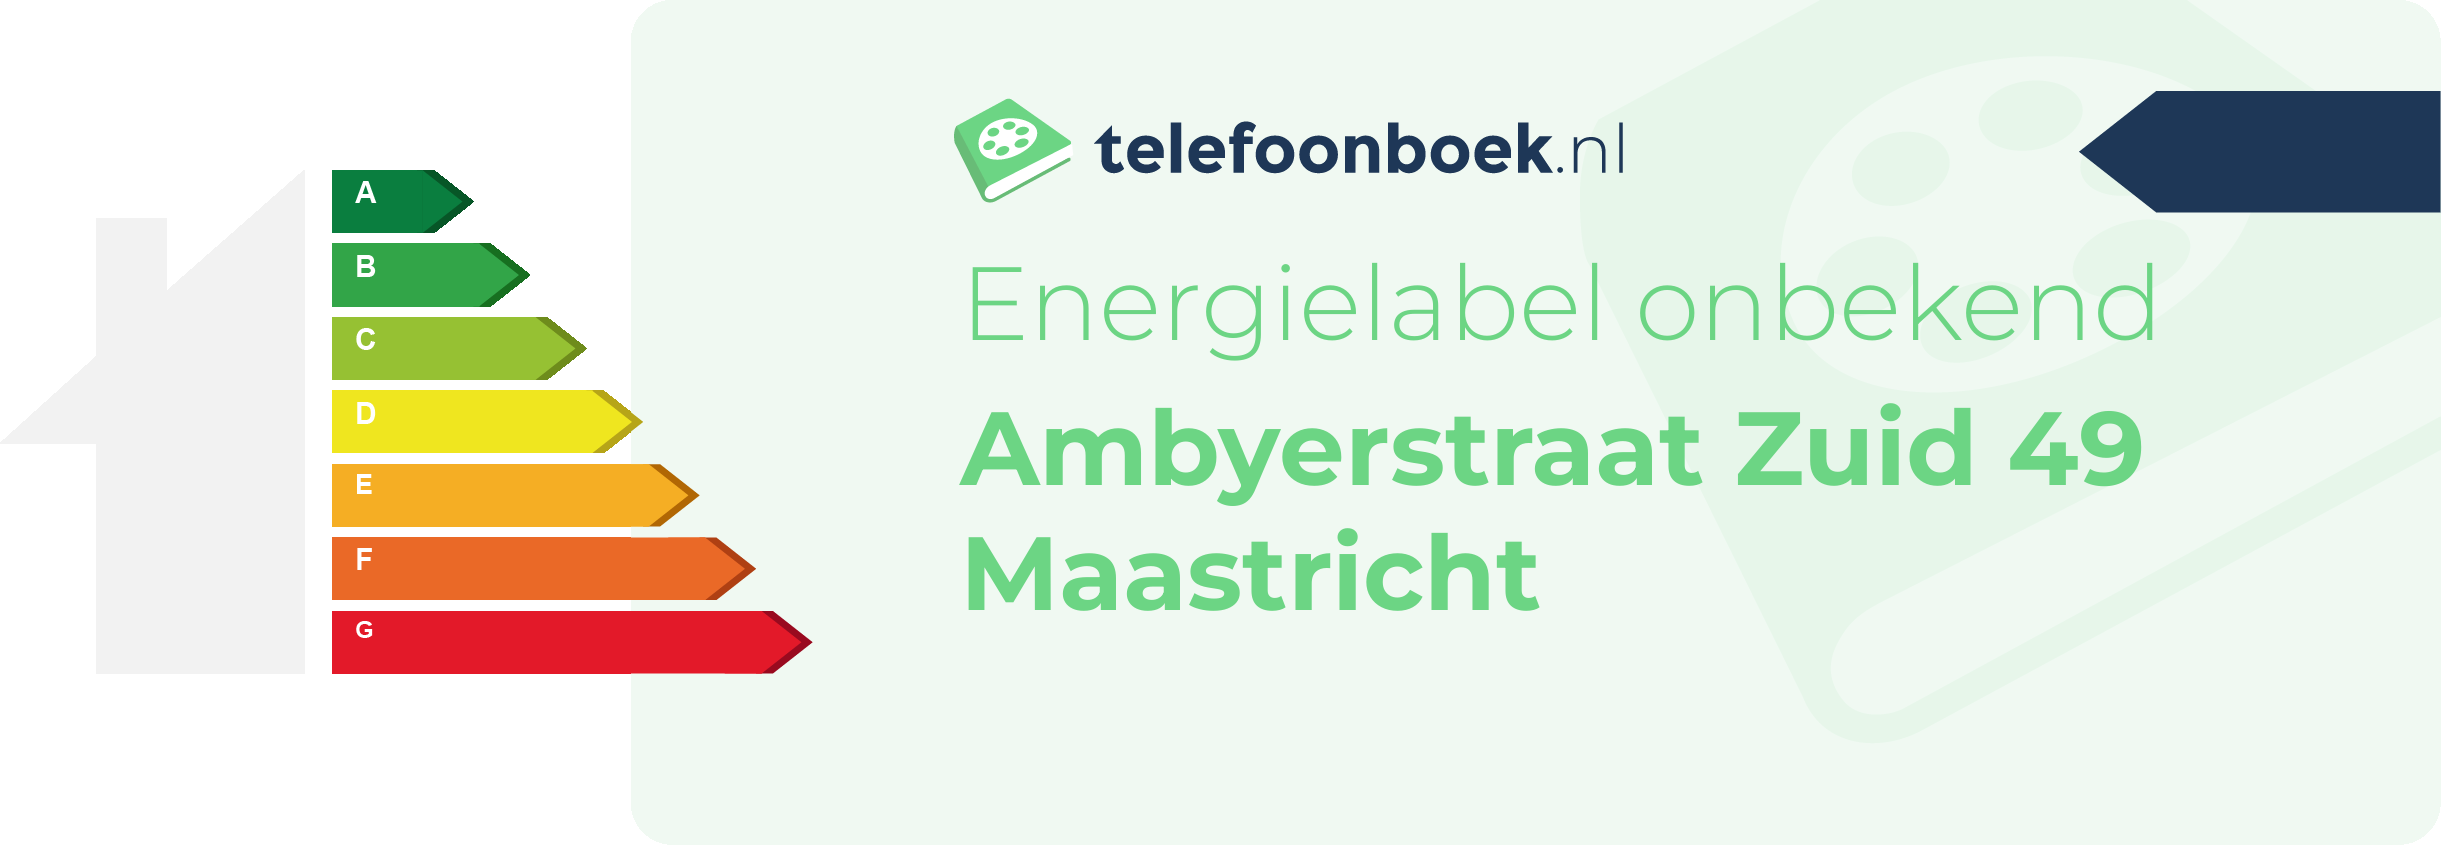 Energielabel Ambyerstraat Zuid 49 Maastricht